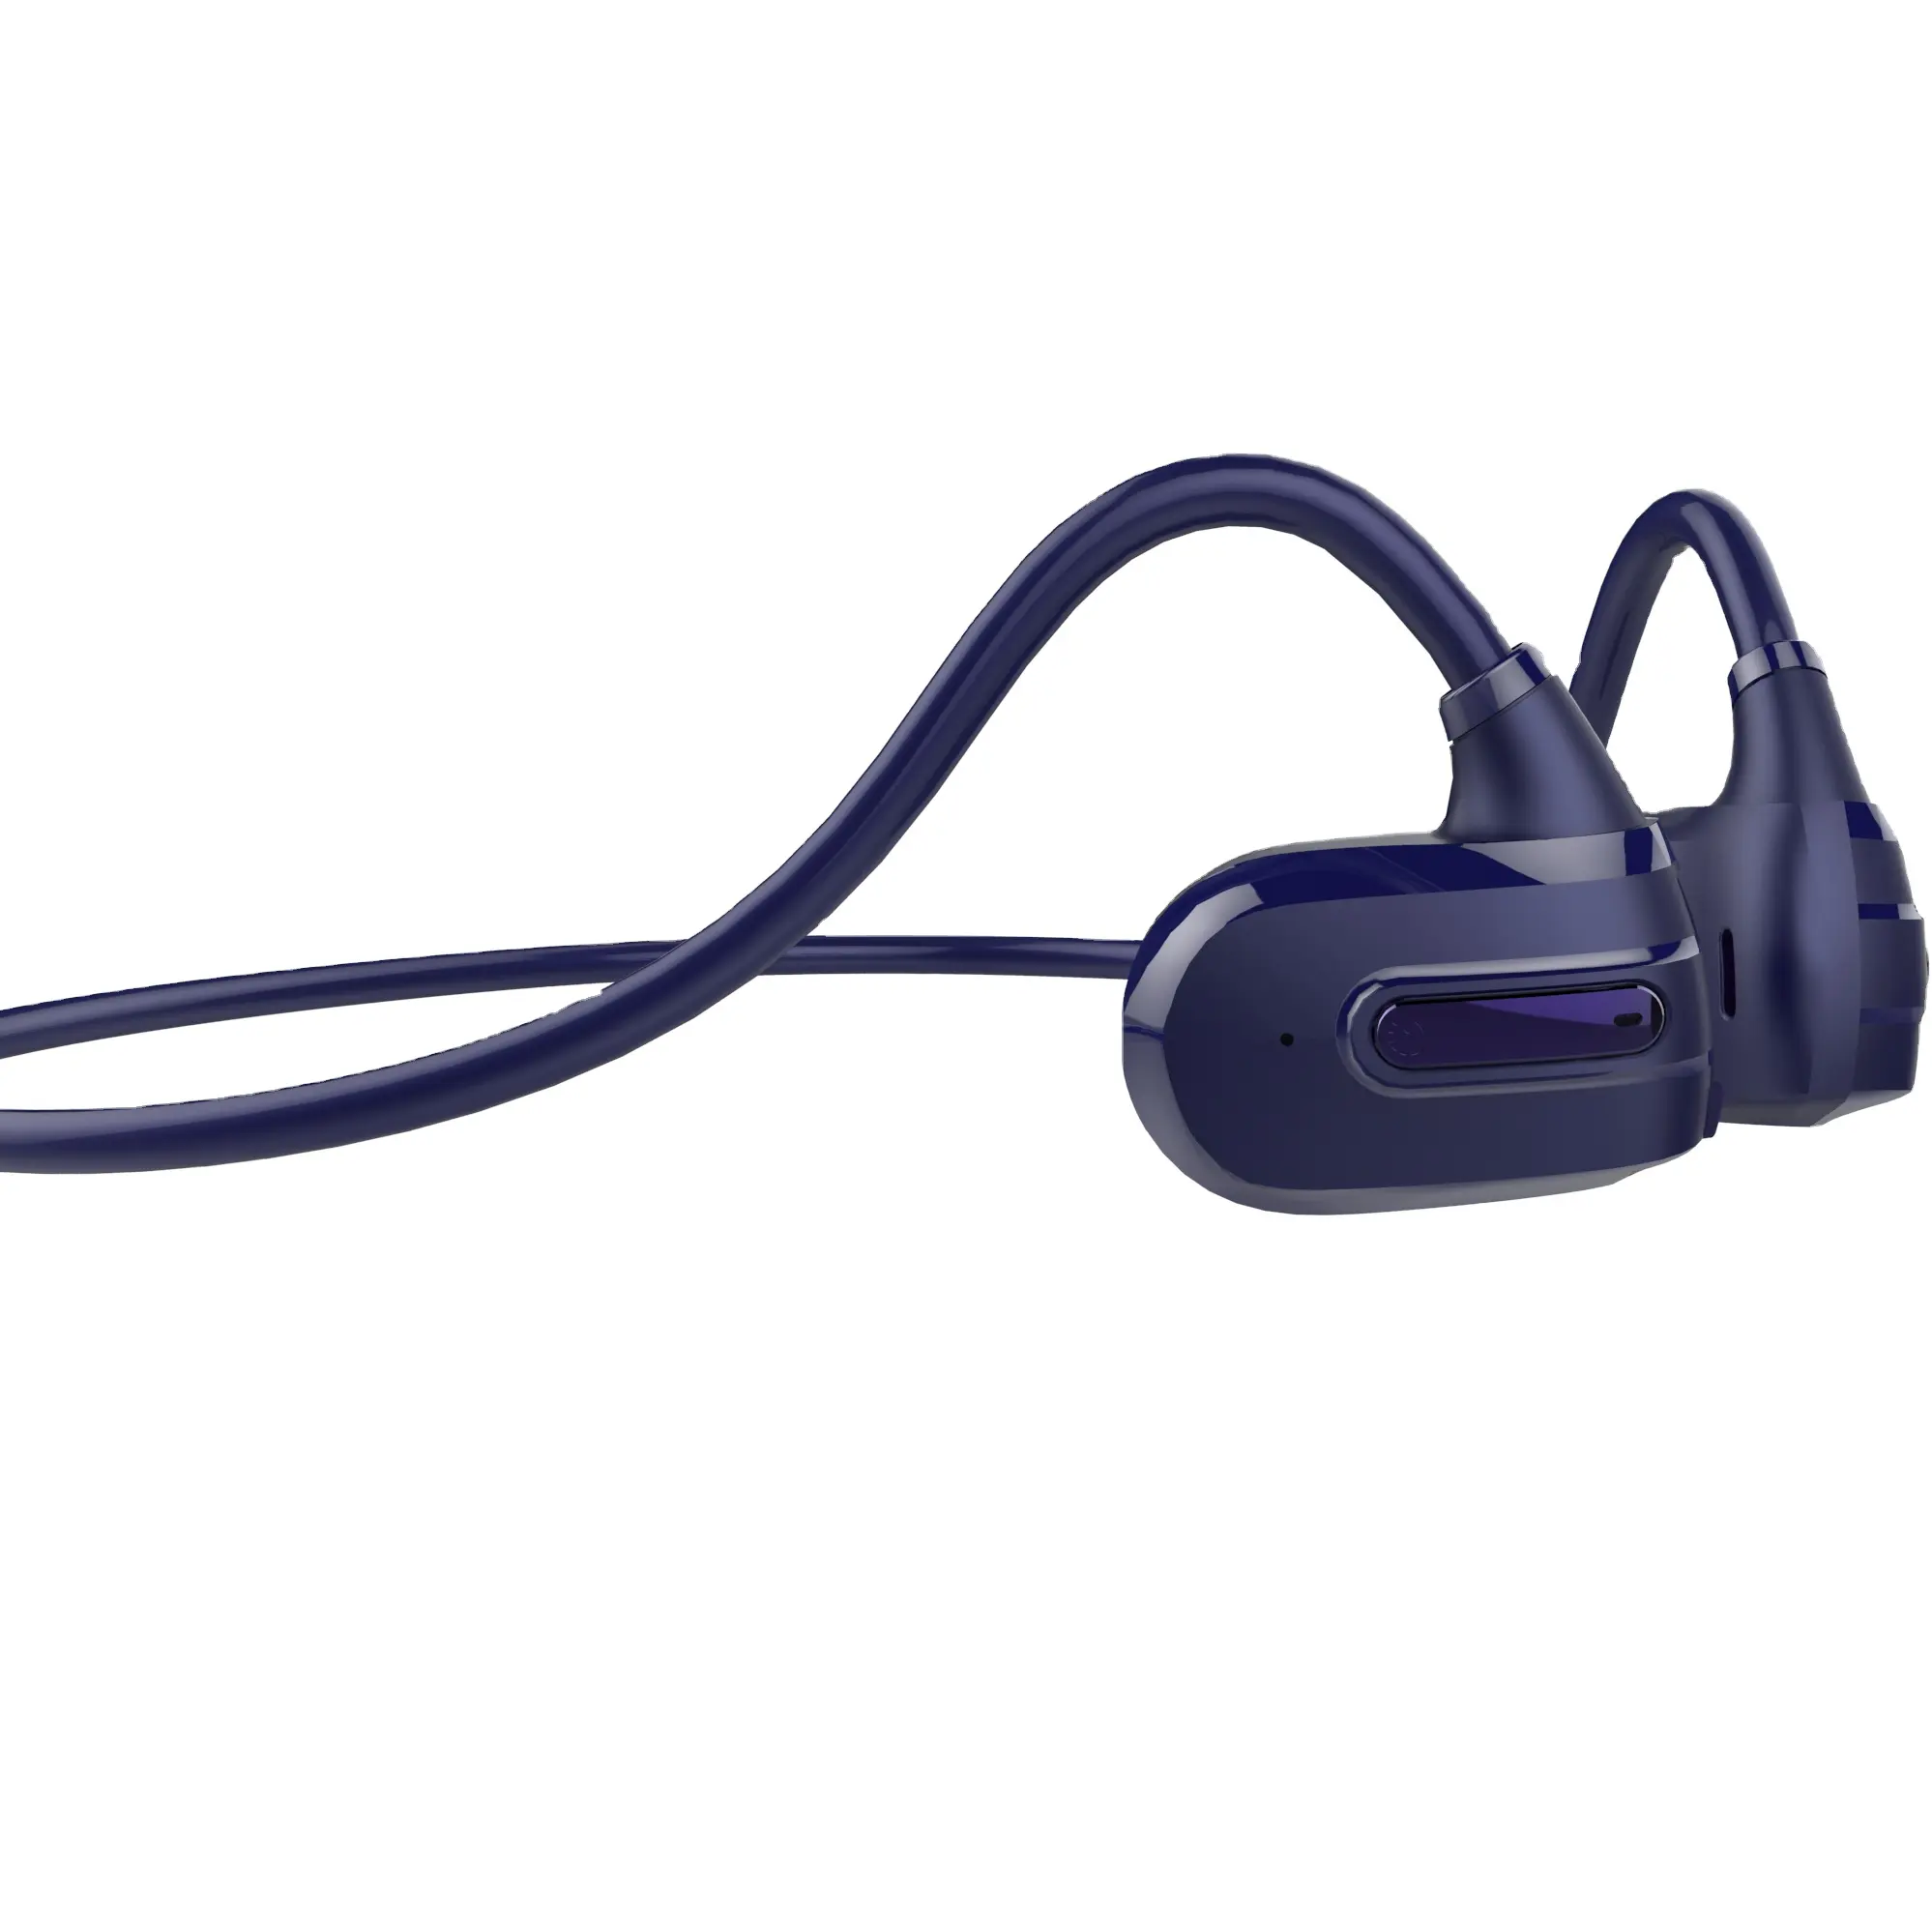 2022 IPX4 G3 Lightweight Wireless Headphone Headset